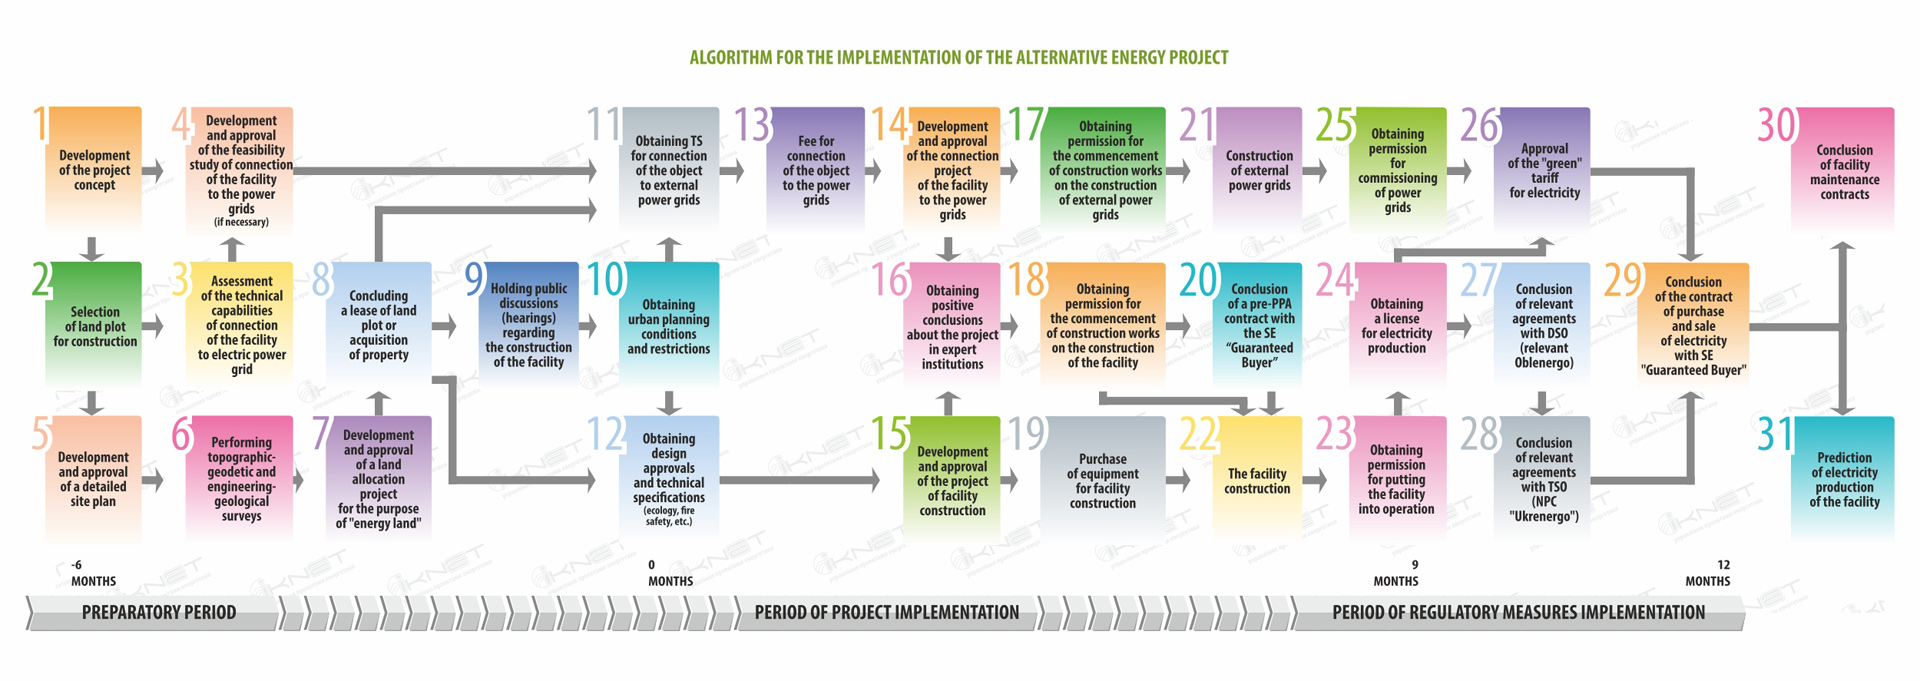 Implementation Algorithm for Alternative Energy project